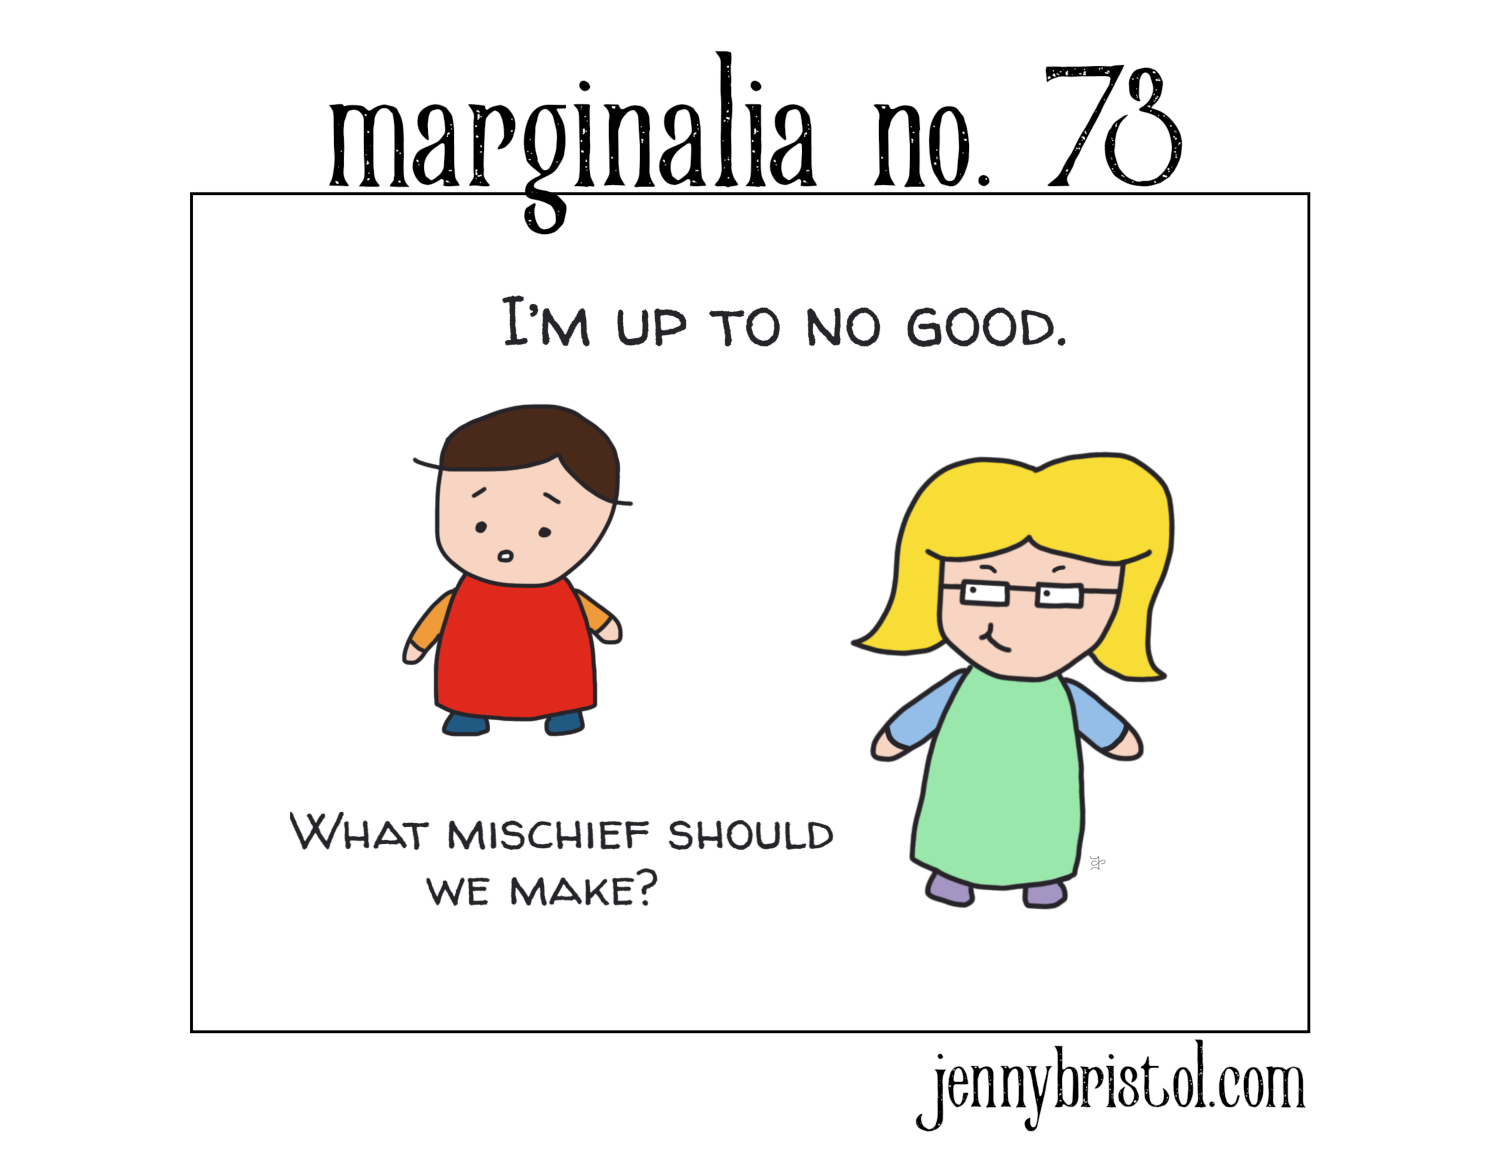 Marginalia No. 73 to post